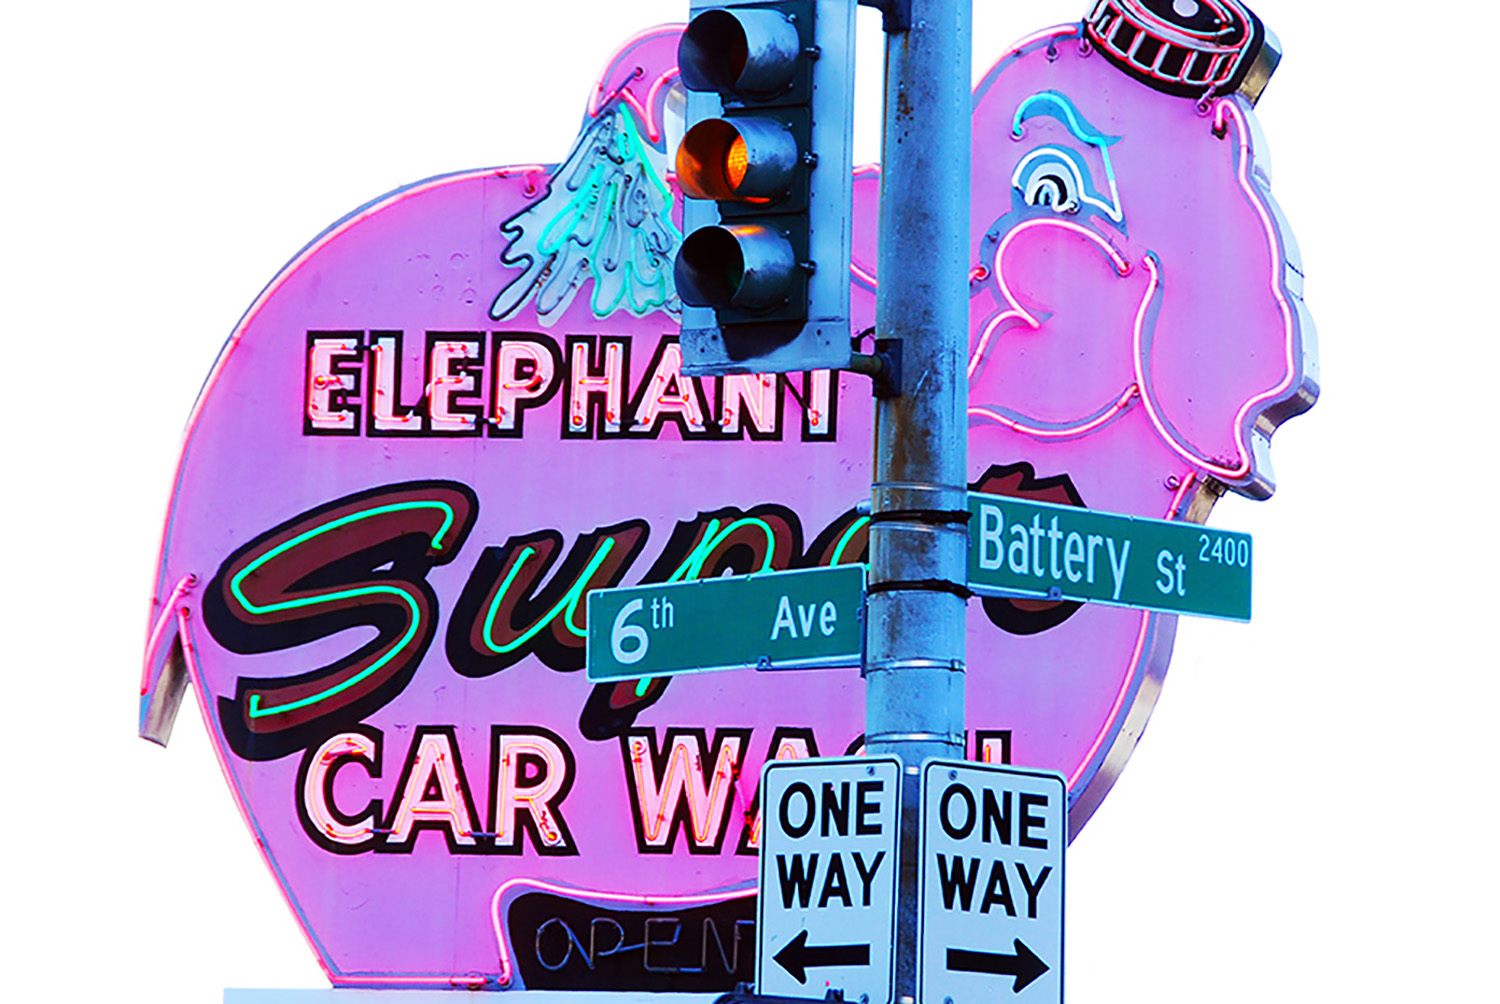 6th_Sixth_Avenue_Battery_Street_Elephant_Carwash_Neon_One_Way_Signs_Traffic_Light_Seattle_Washington.jpg